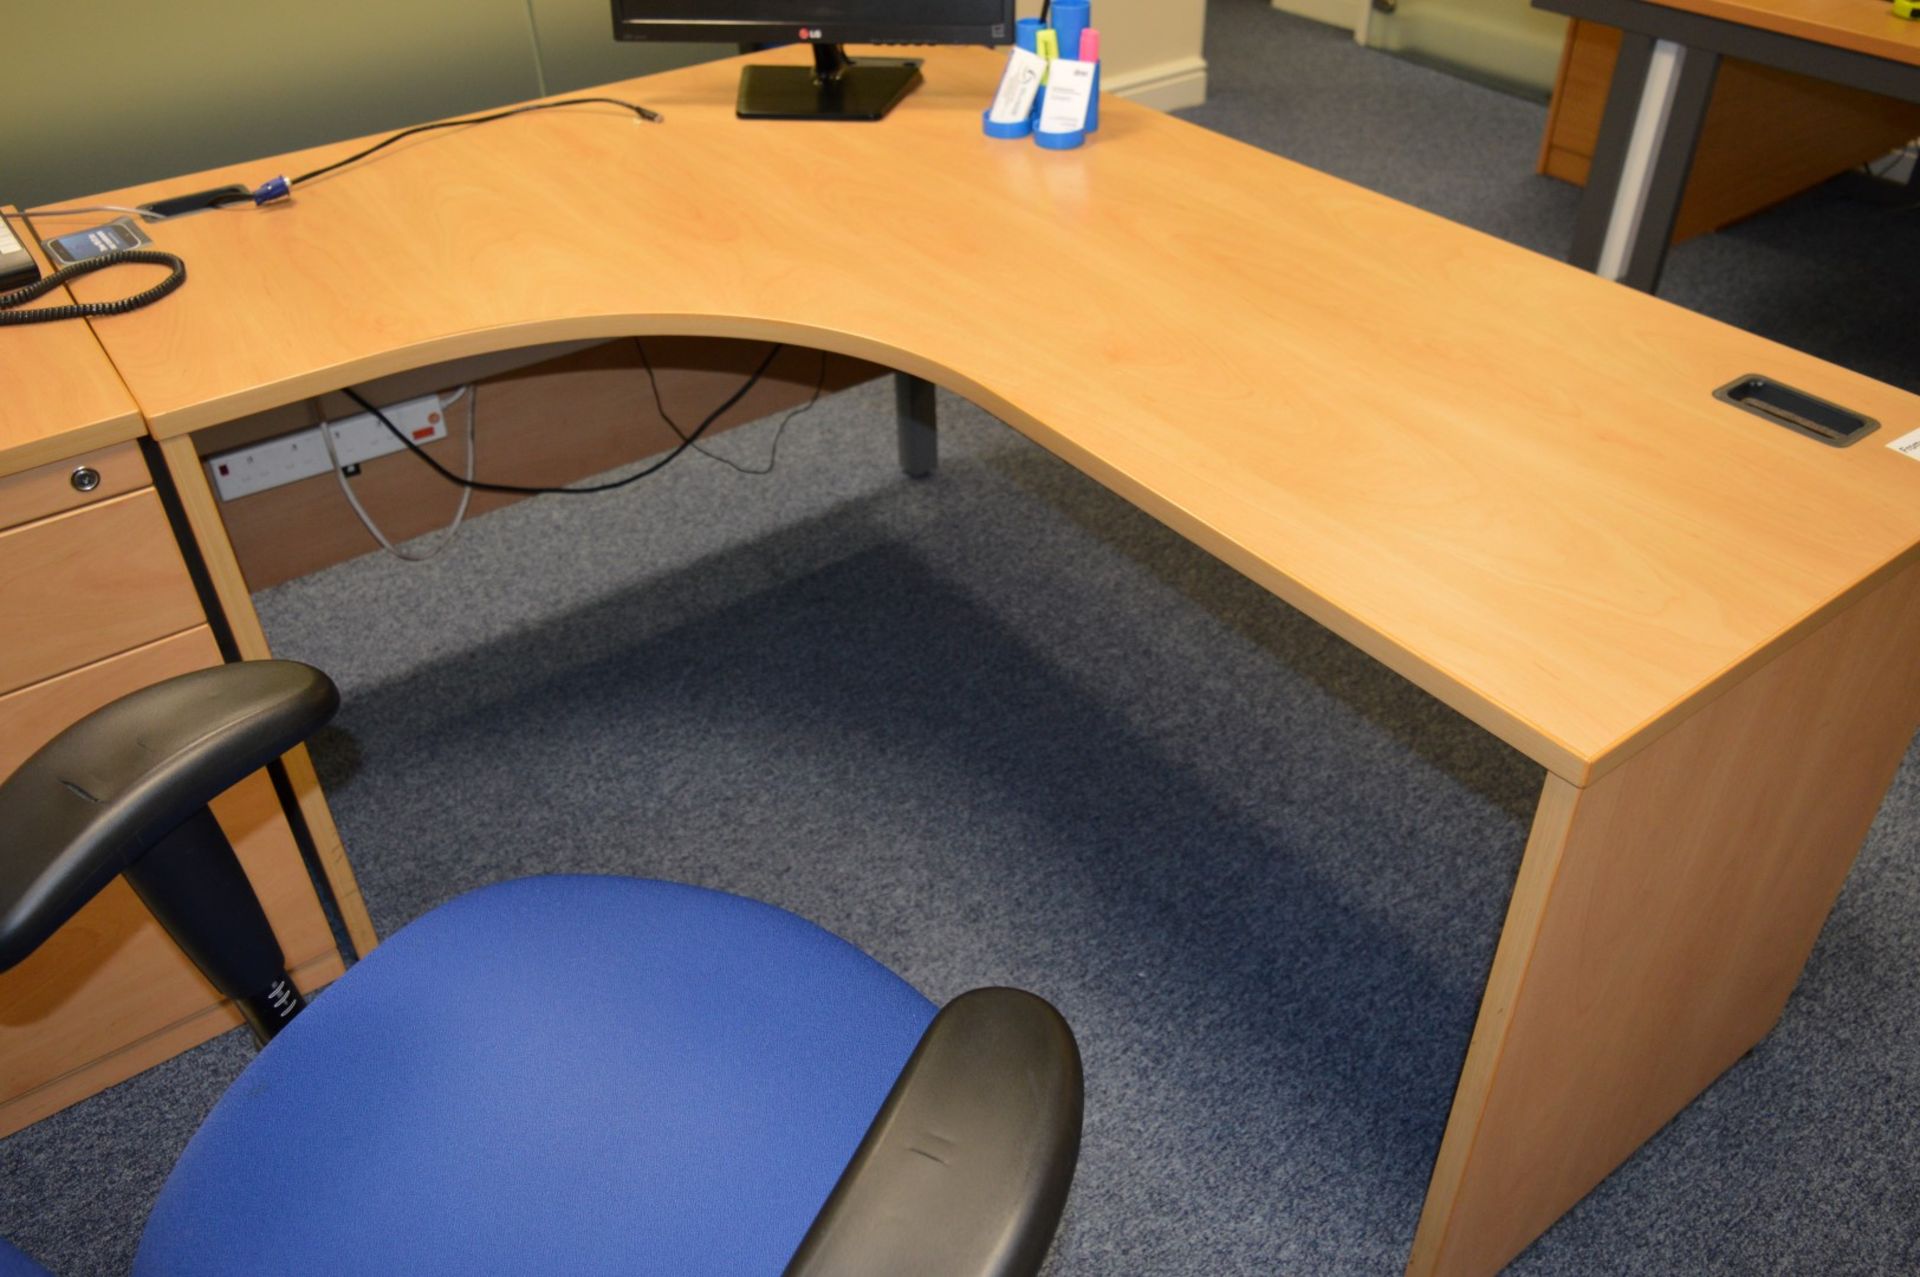 1 x Office Furniture Set Including Large Desk, Drawer Pedestal, Swivel Chair and Shelving Unit - - Image 6 of 10